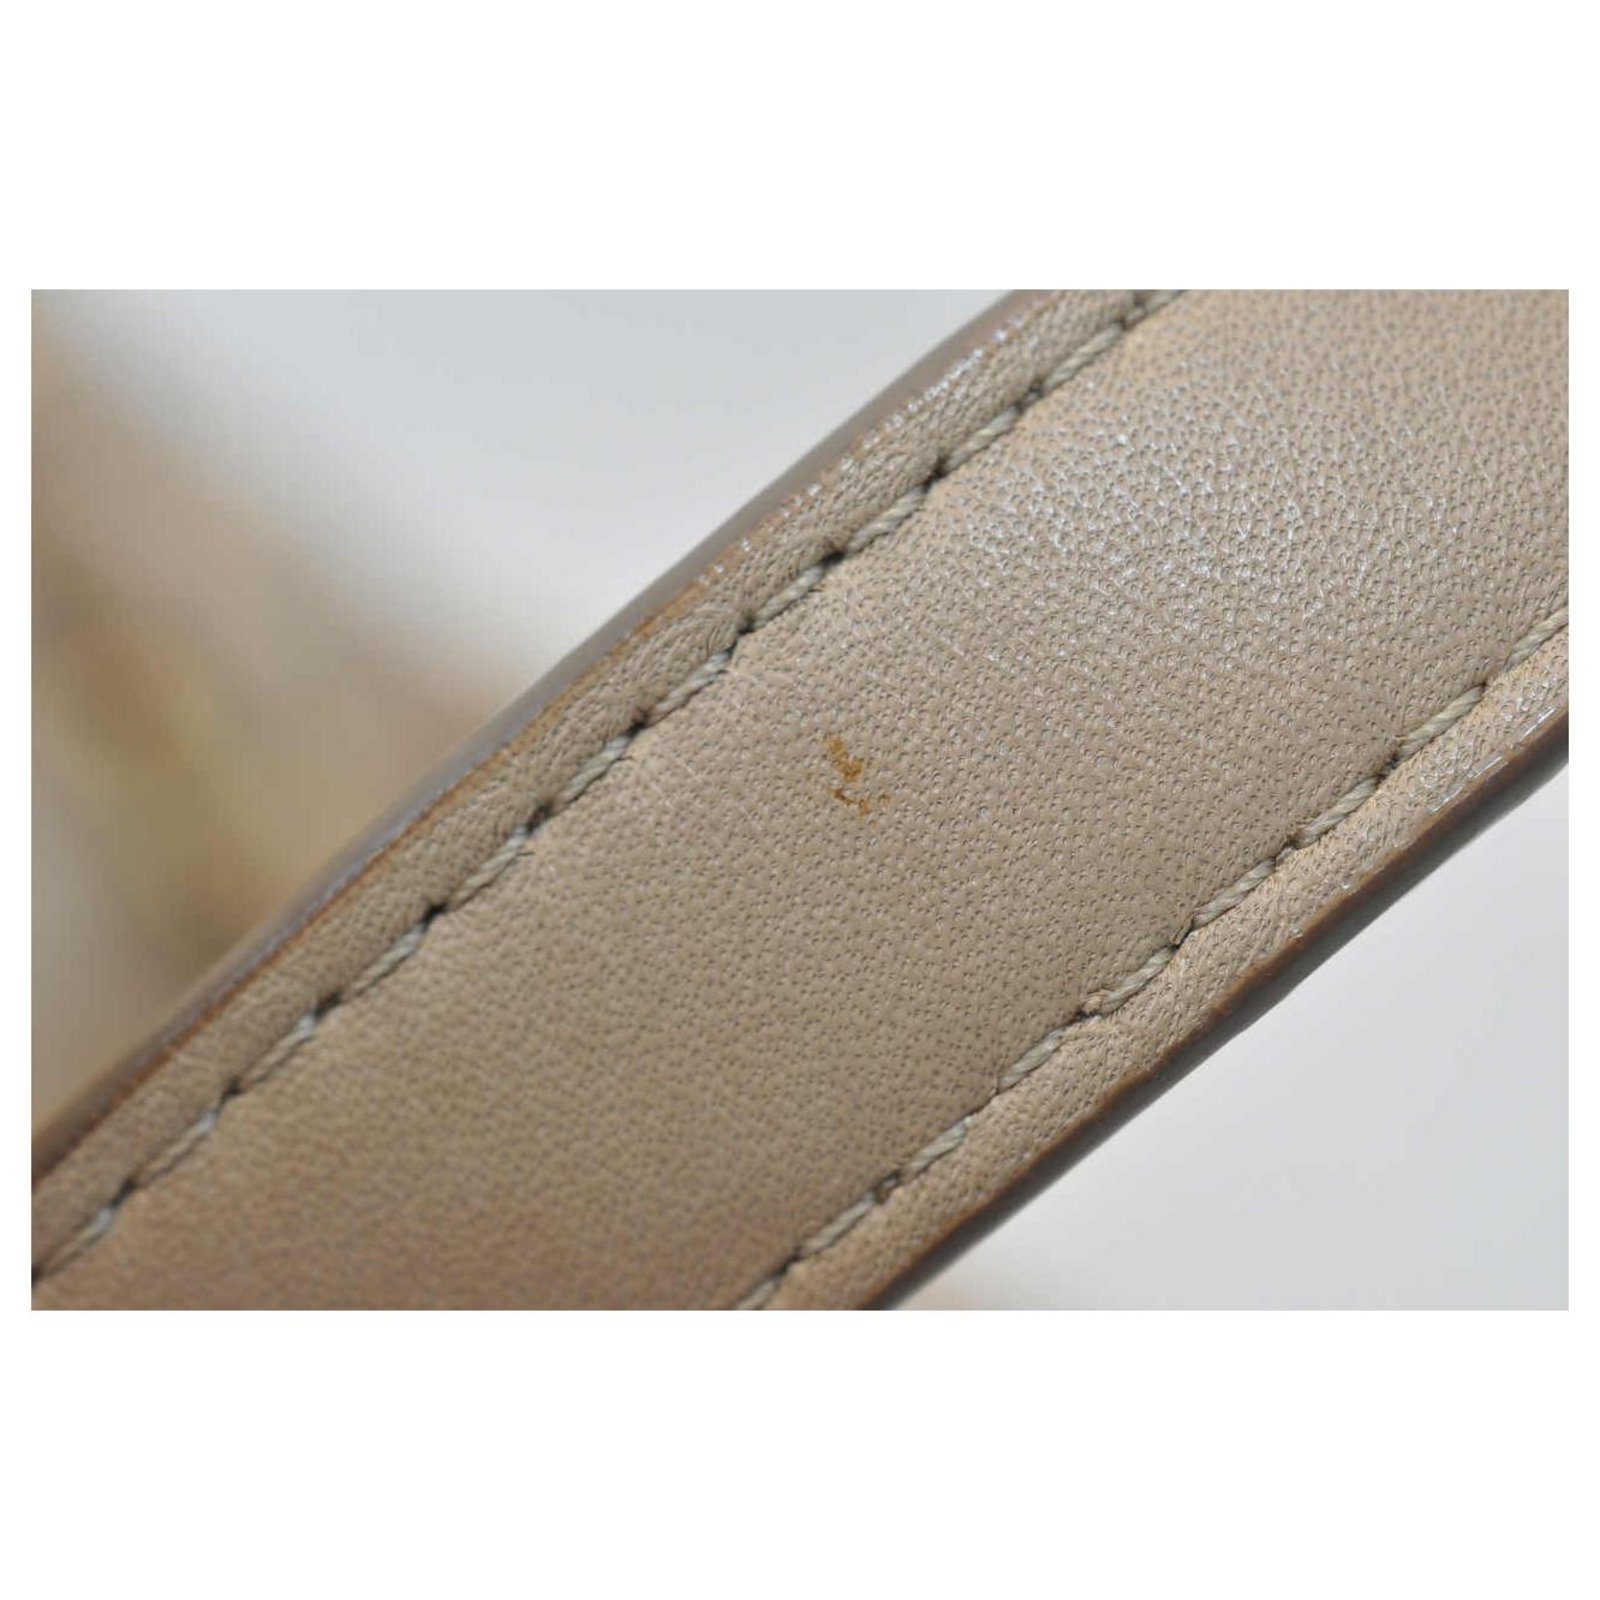 MCM Logos pattern shoulder tote bag White Leather ref.148365